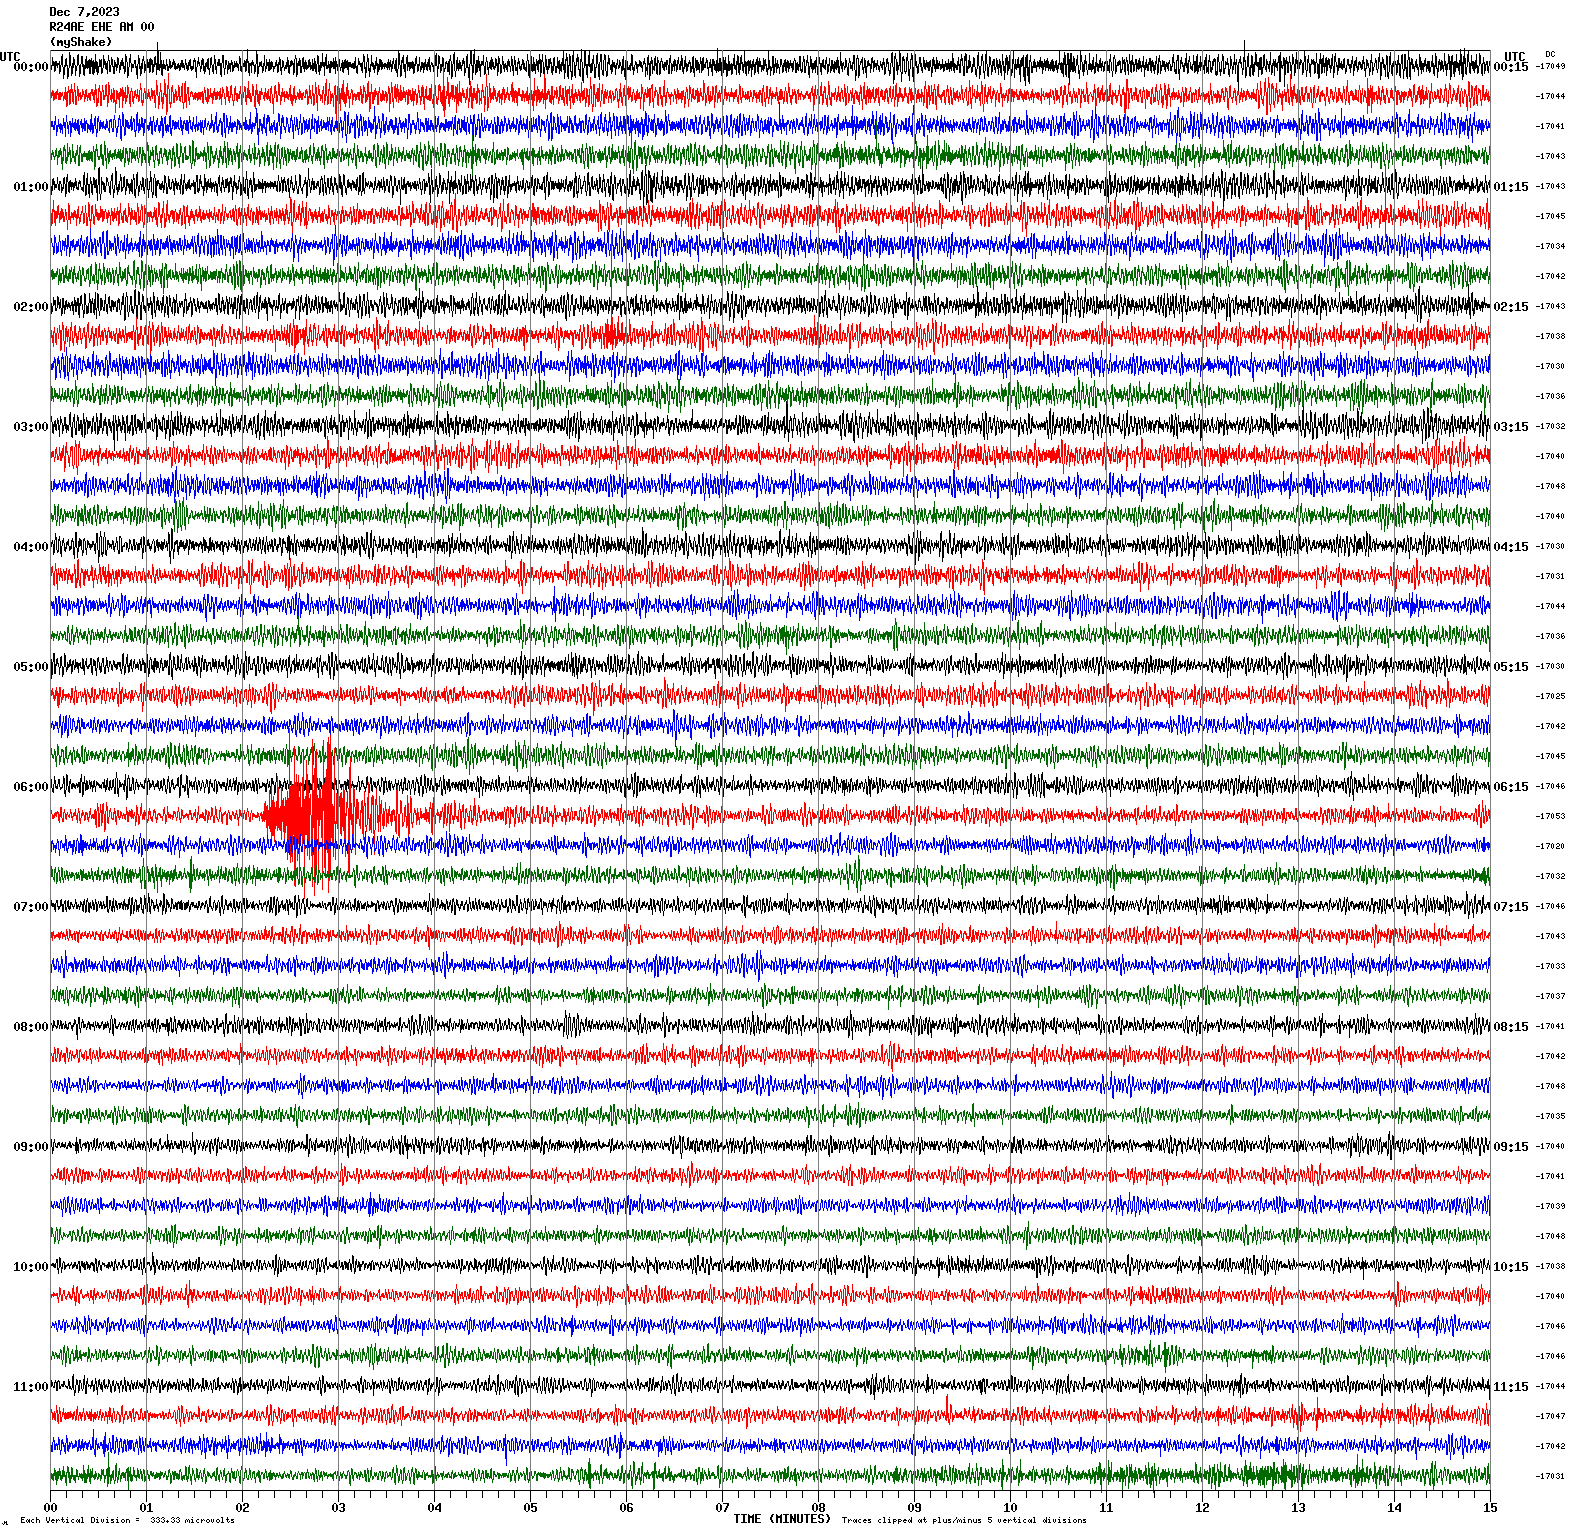 /seismic-data/R24AE/R24AE_EHE_AM_00.2023120700.gif